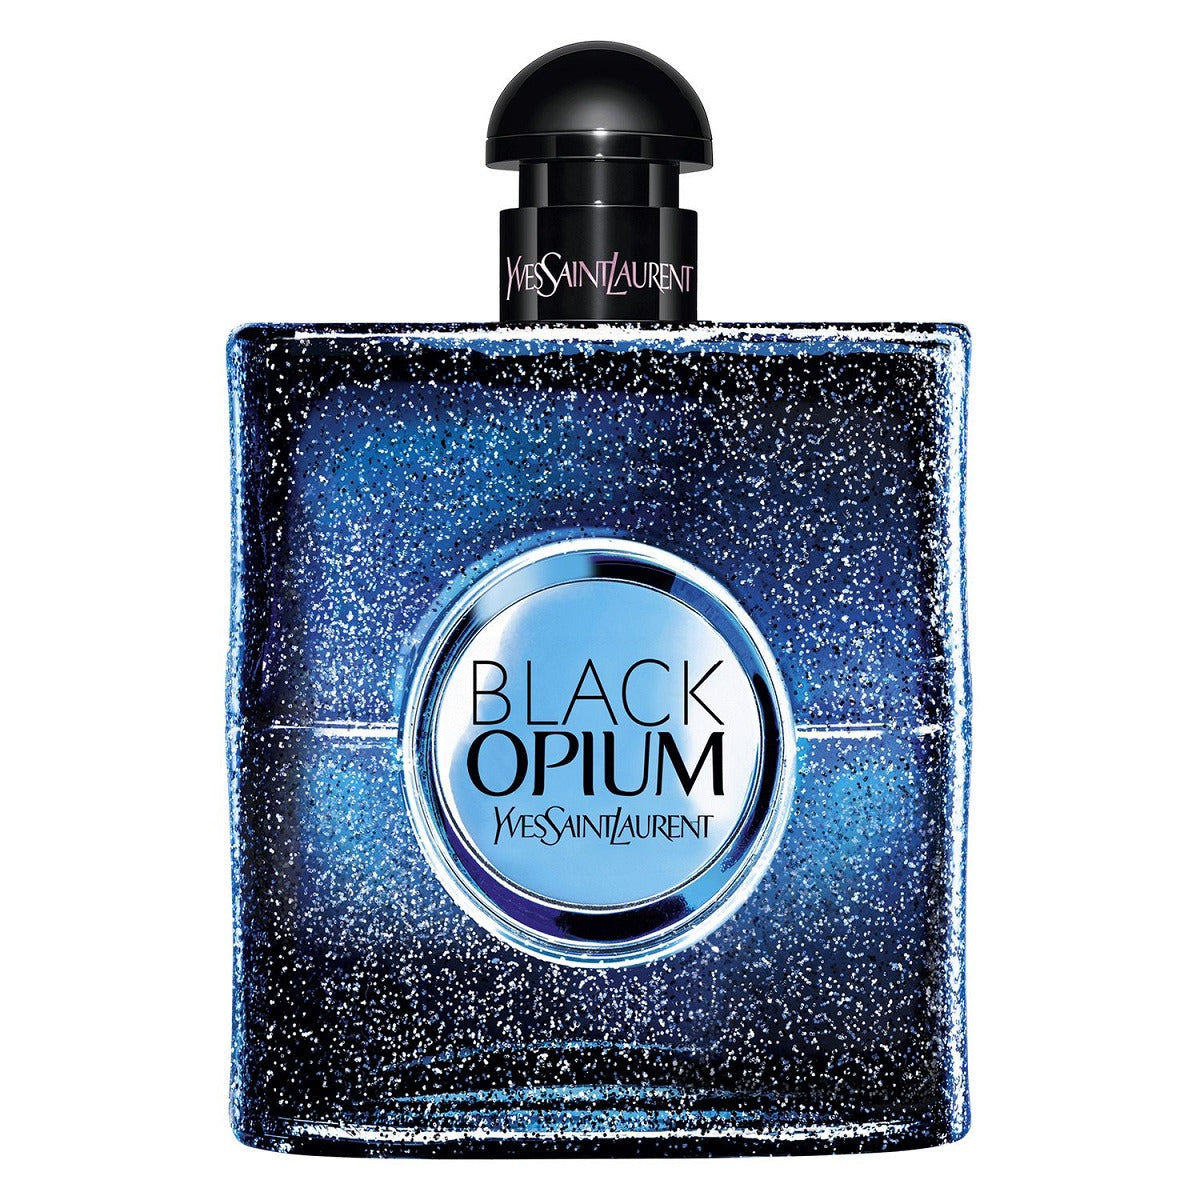 yves saint laurent black opium intense